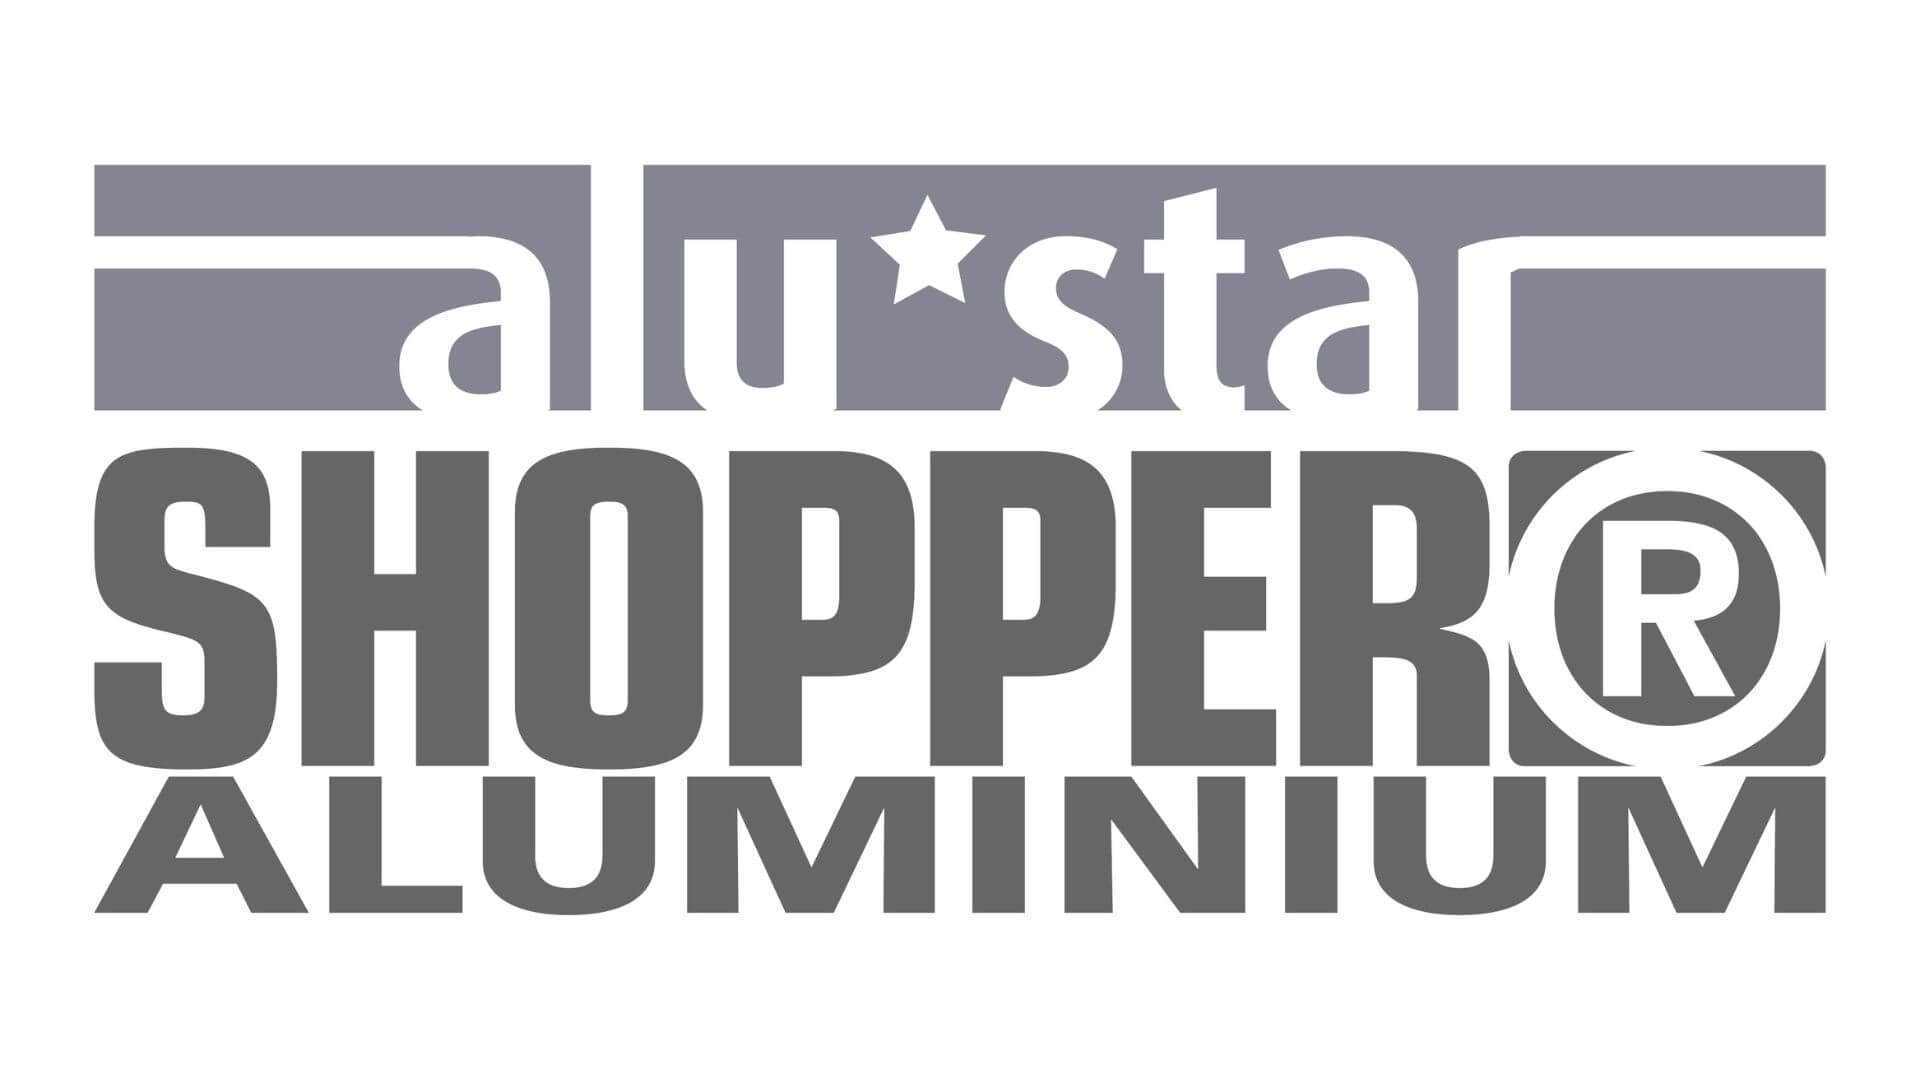 Video laden: Film über den Andersen Alu Star Shopper